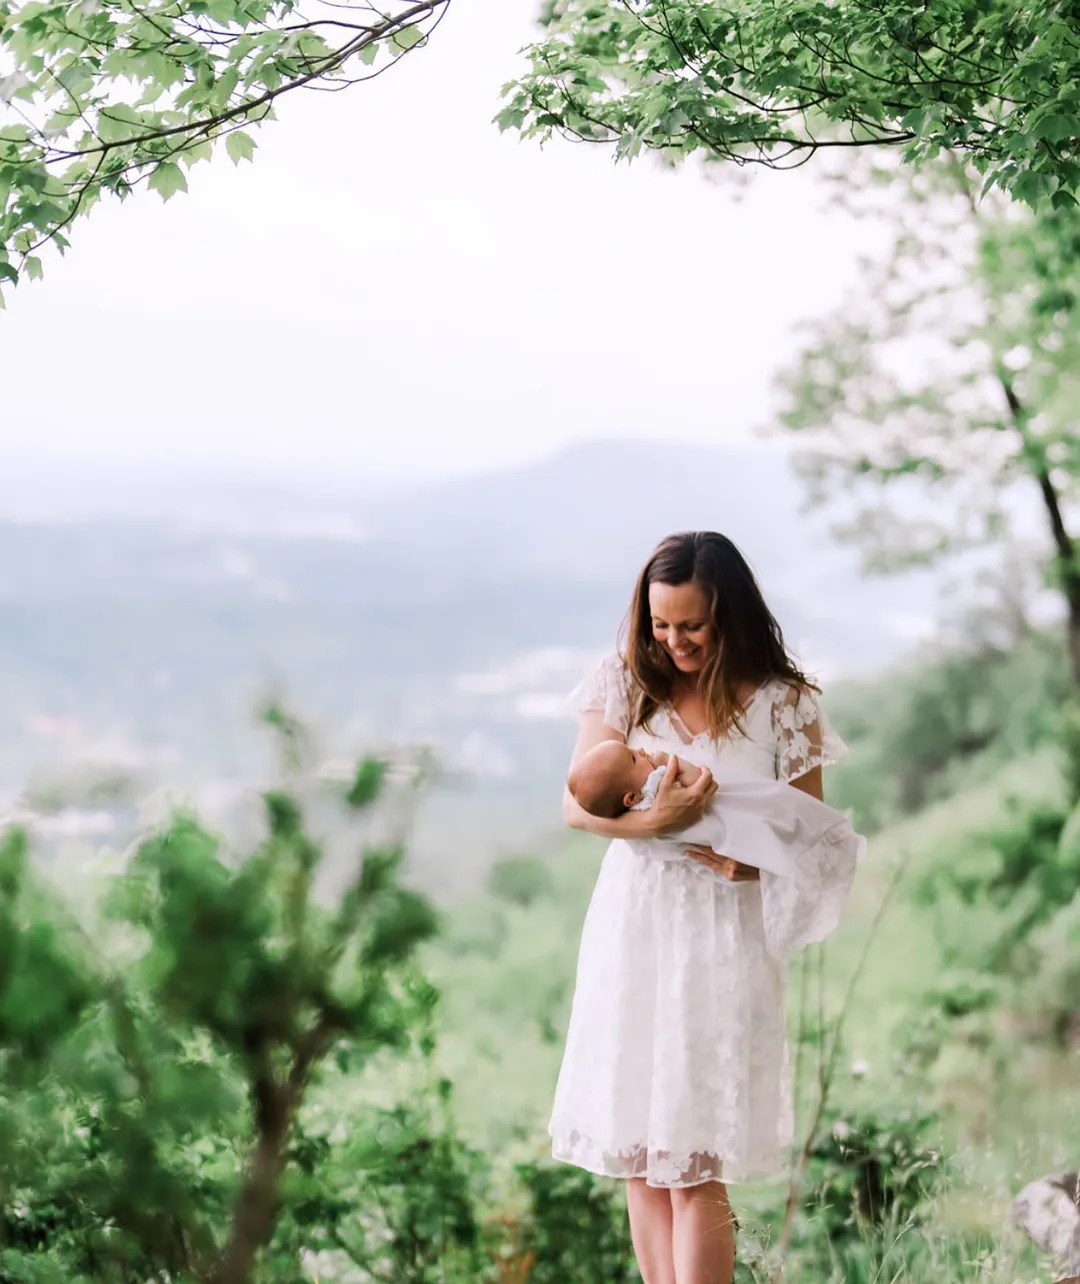 Rachel Boston is holding her baby Grace, as seen in her Mother's Day Instagram post